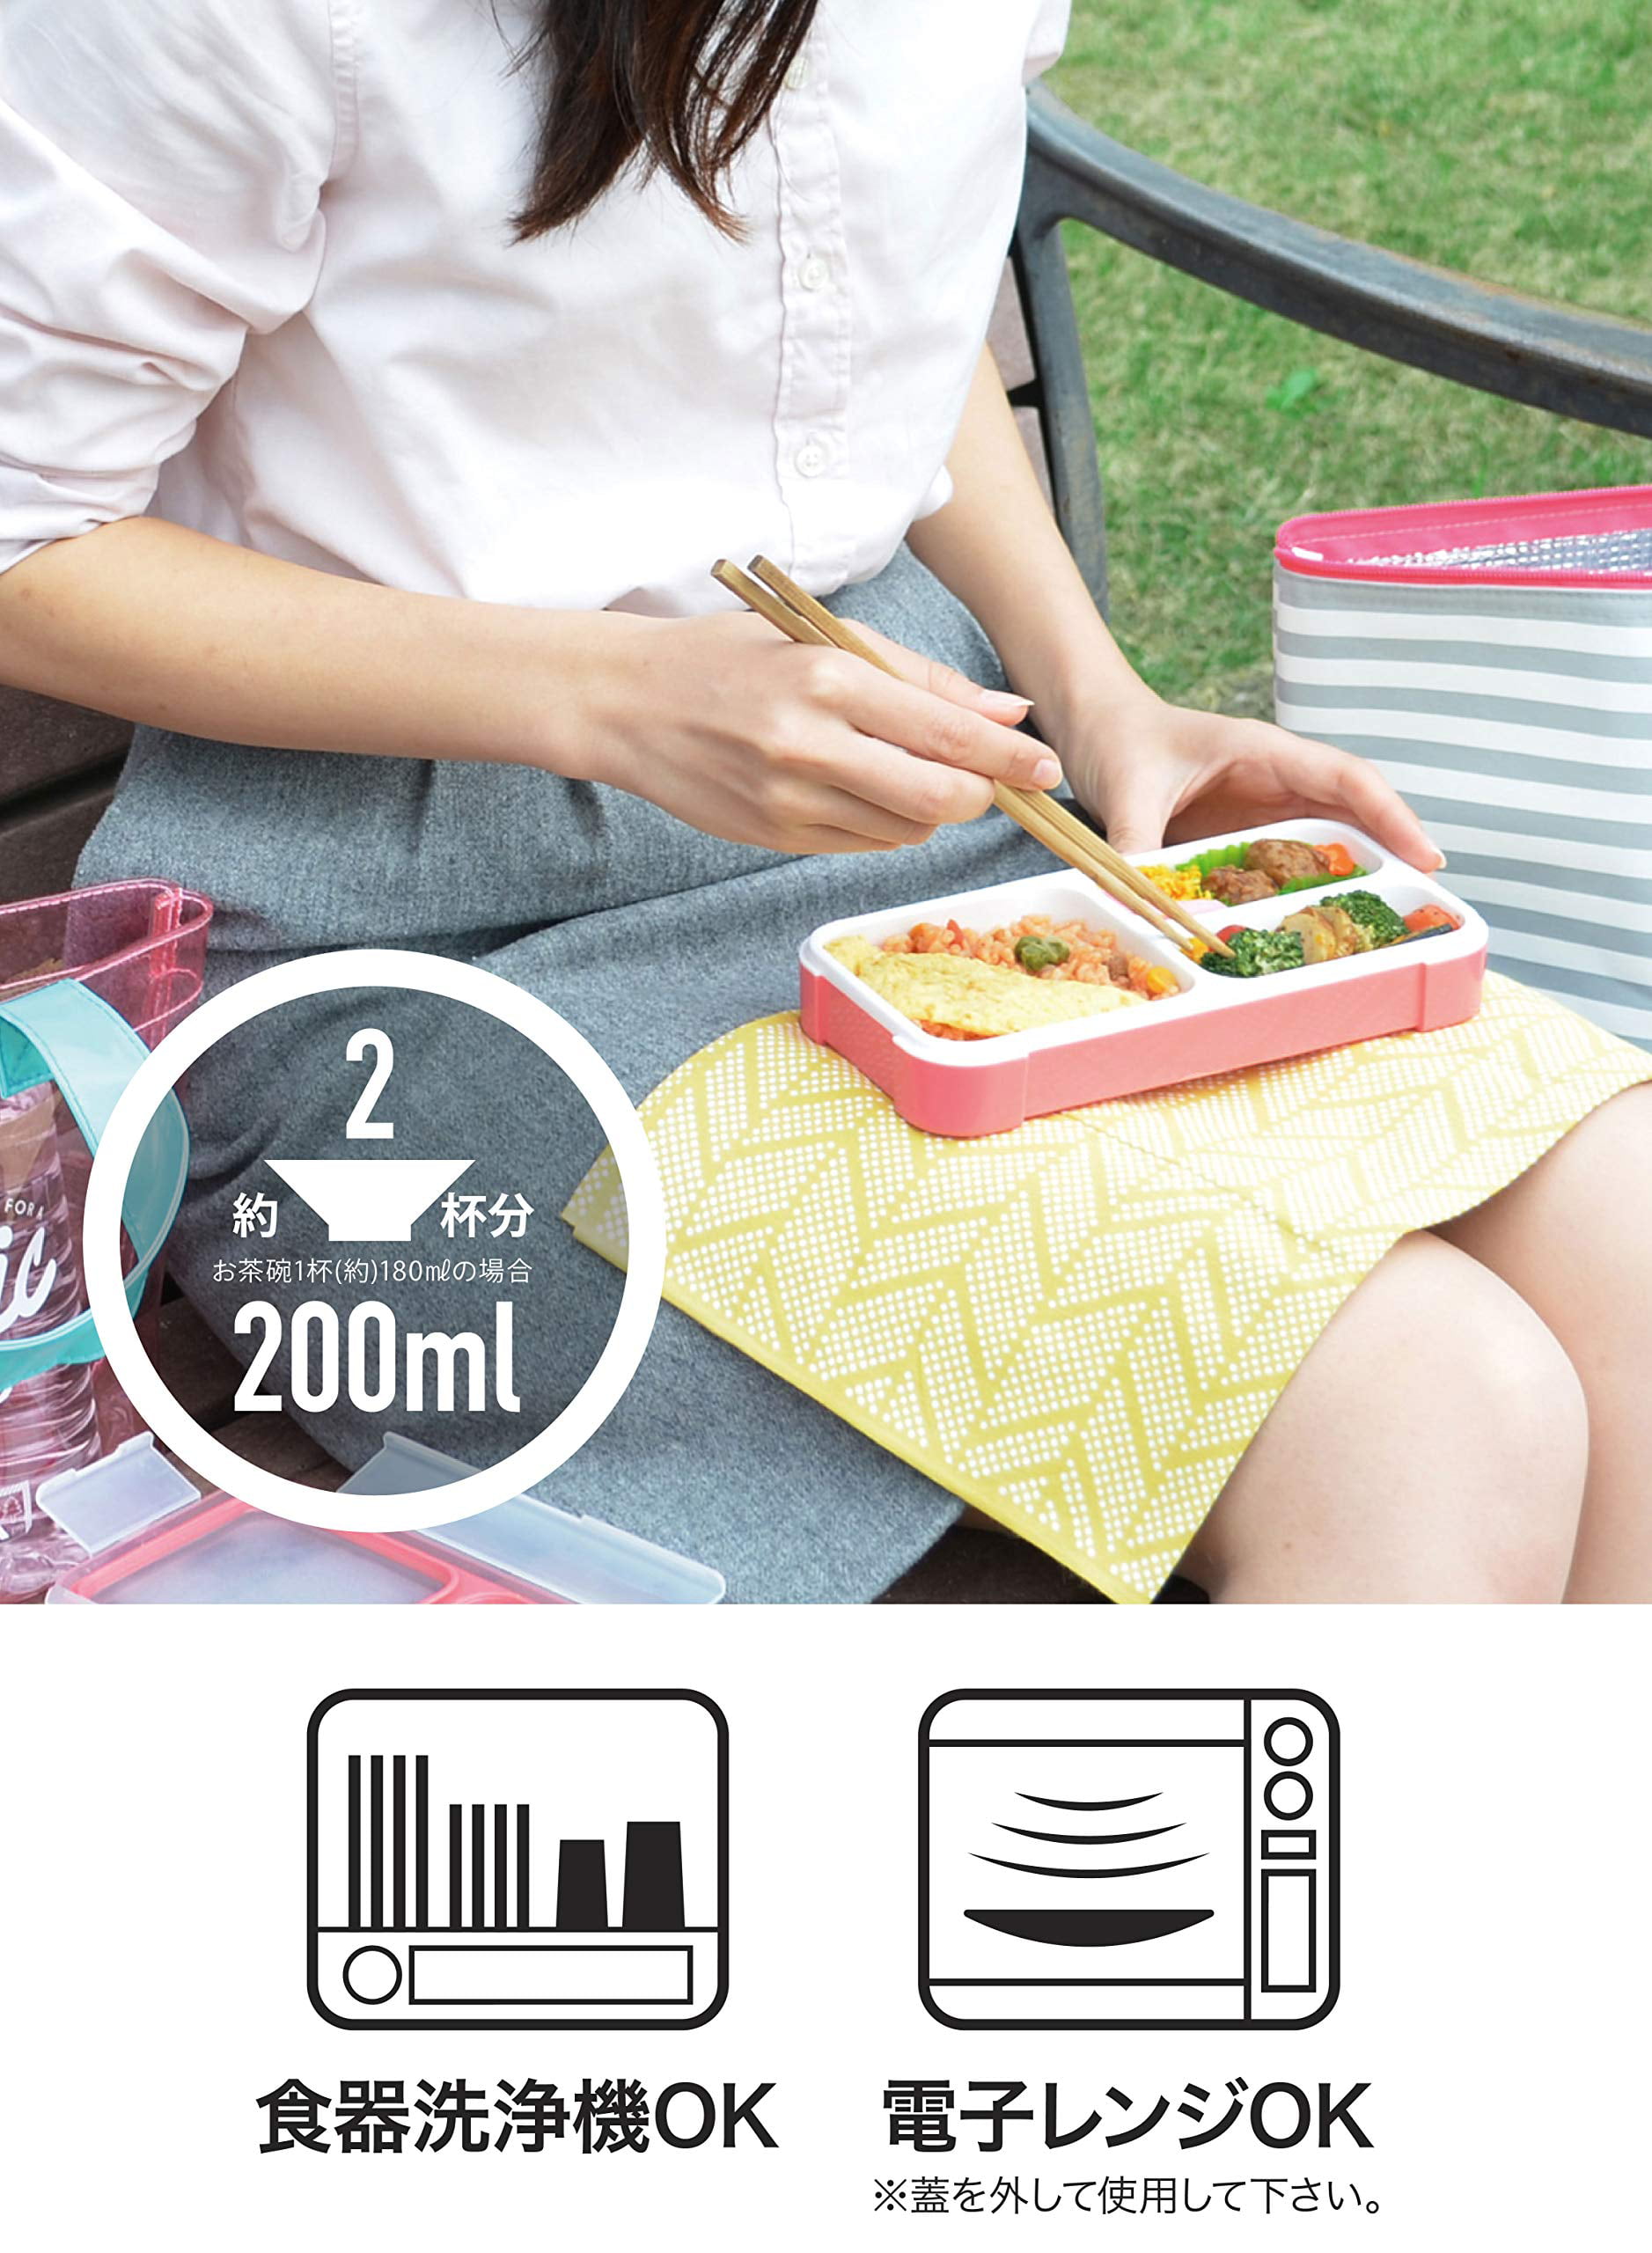 CB Japan Foodman Thin Lunch Box 800ml Mint Green